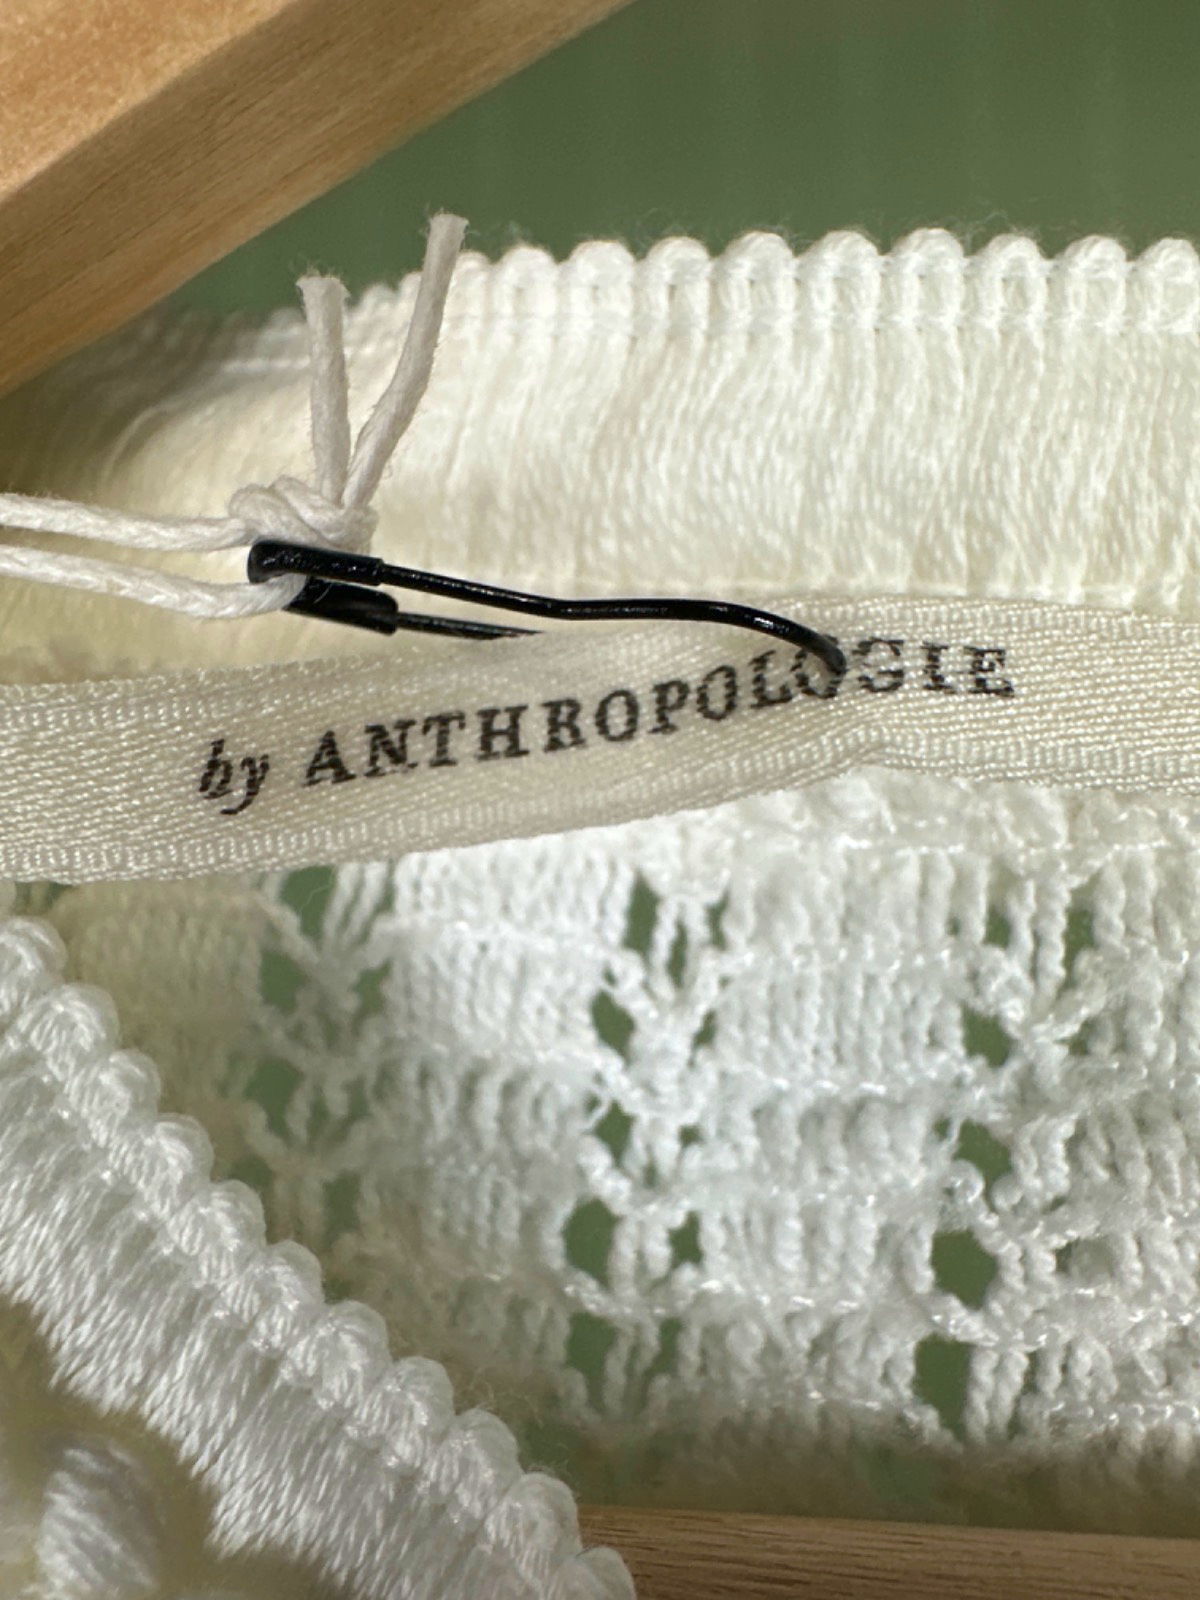 Anthropologie White Crochet Maxi Dress Small